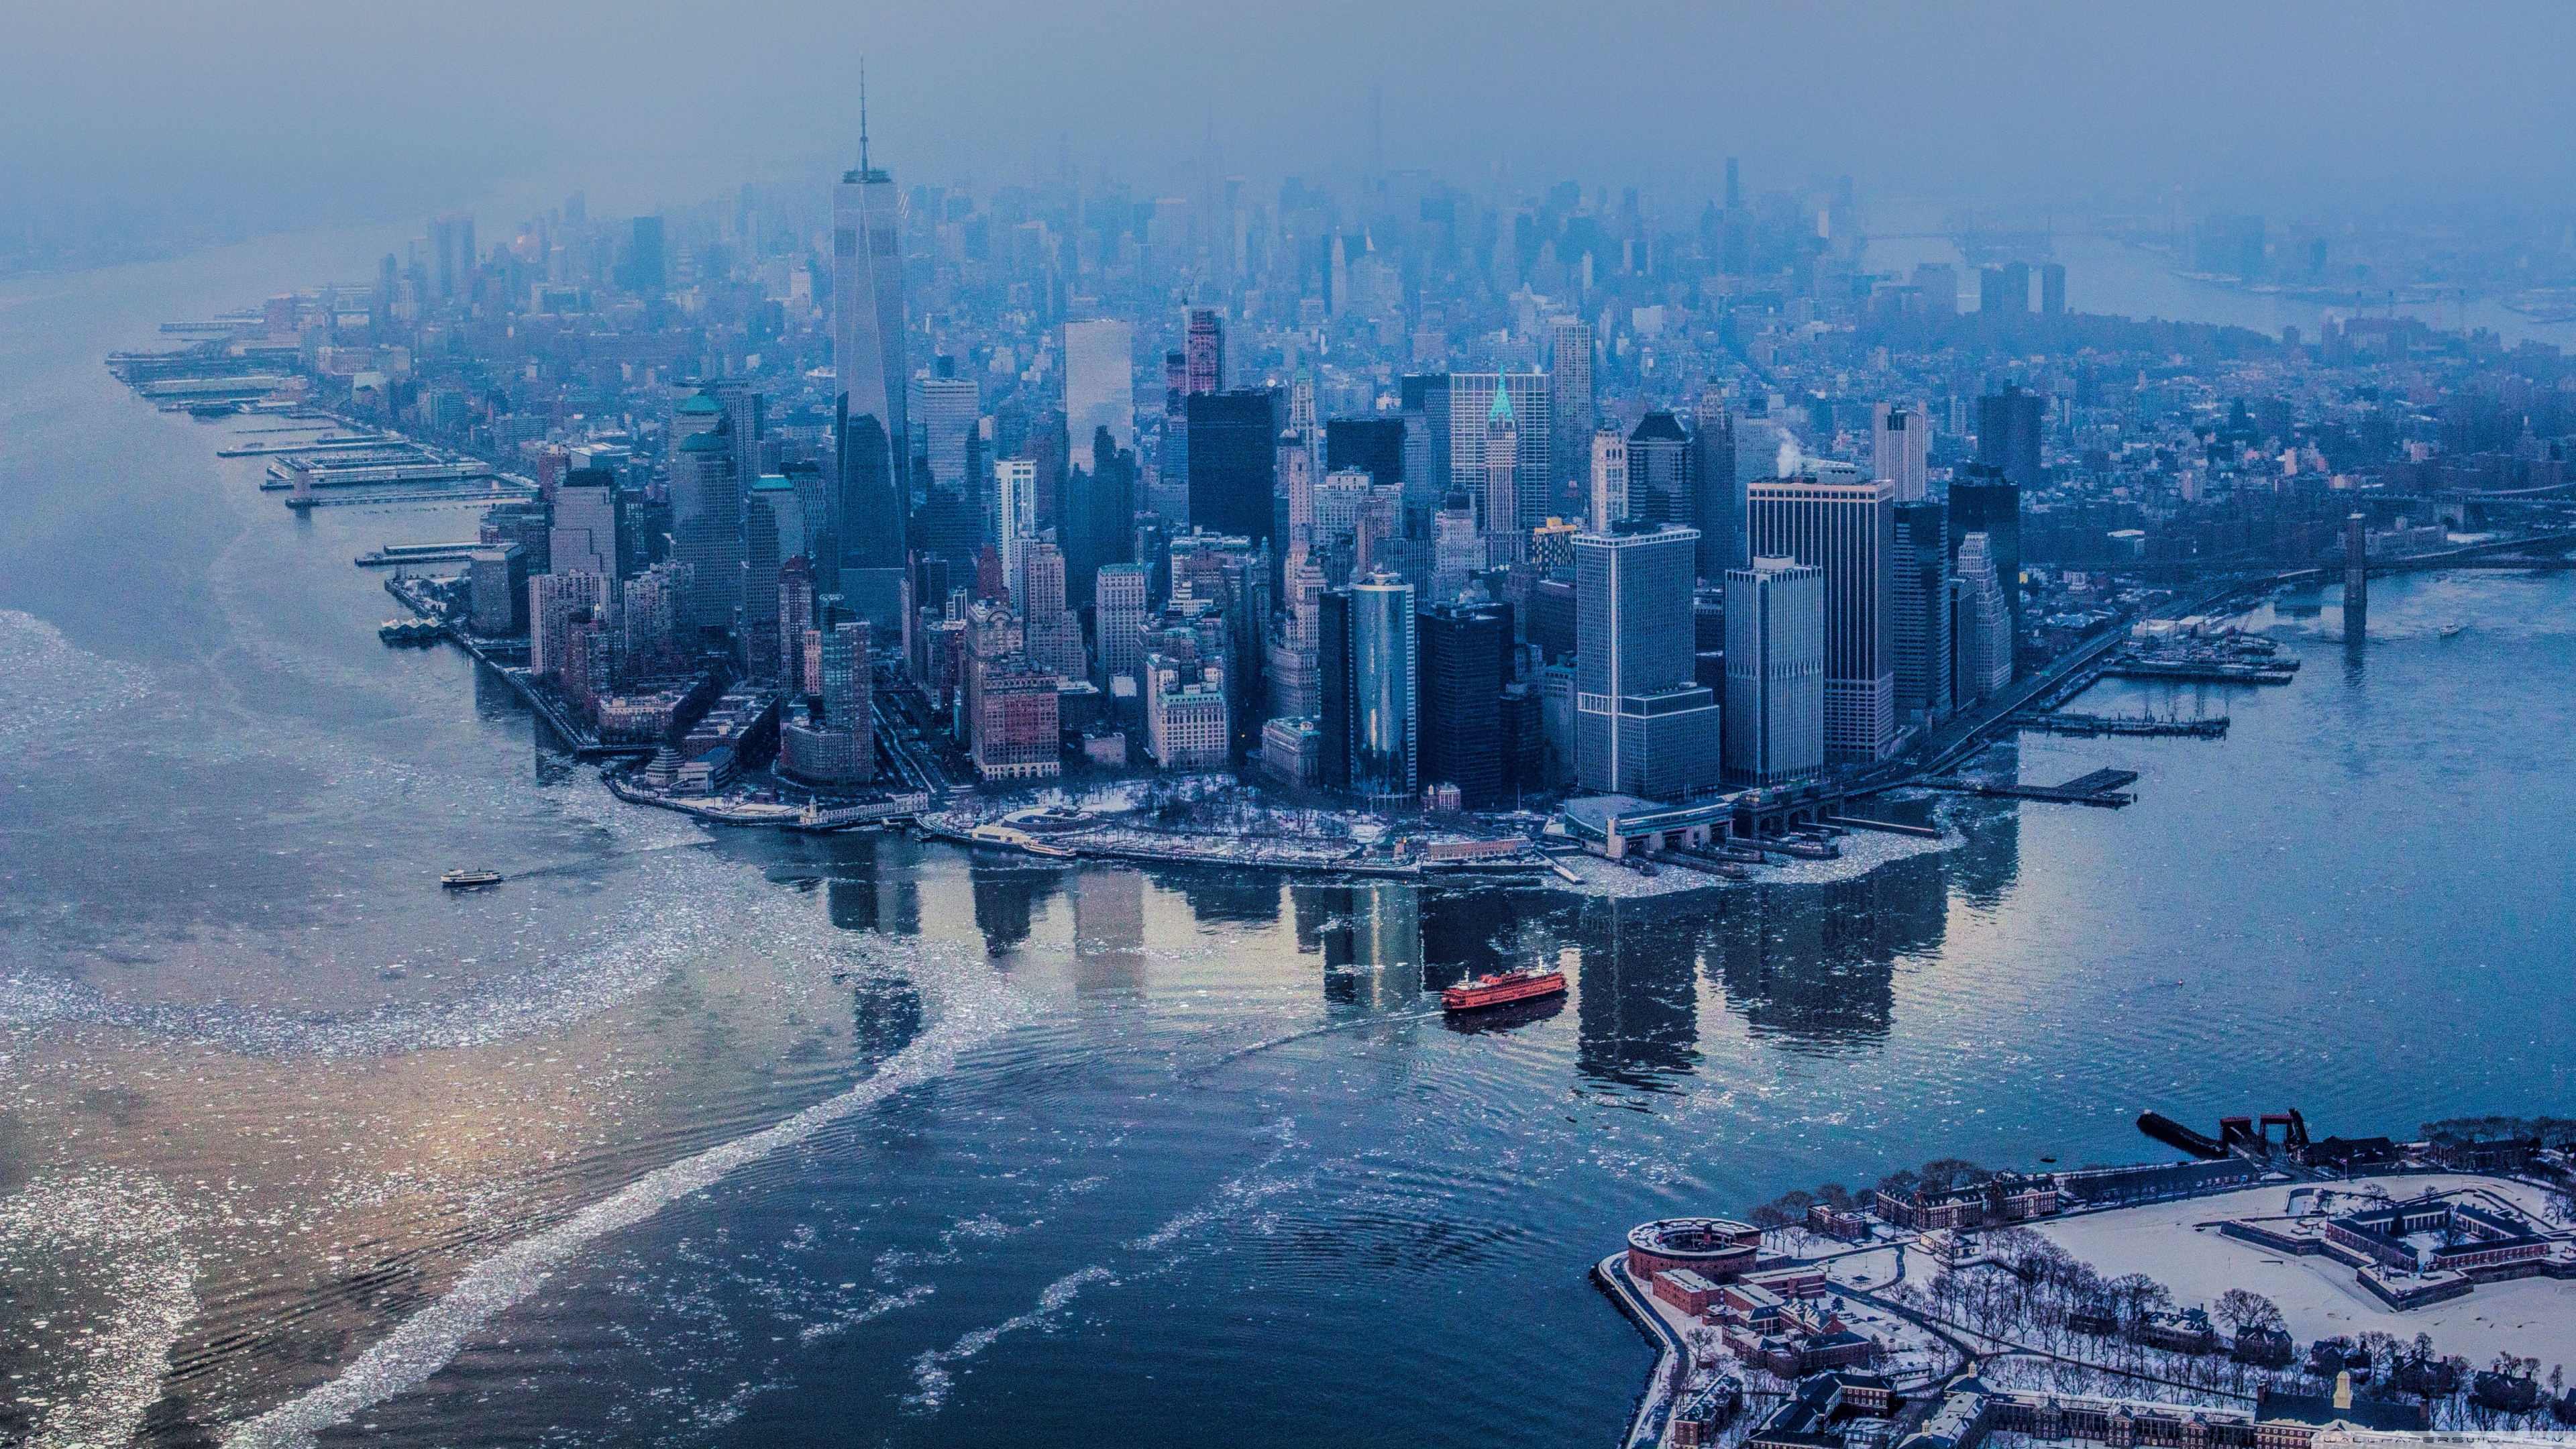 Manhattan (Travels), 4K New York City wallpapers, High-definition images, 3840x2160 4K Desktop